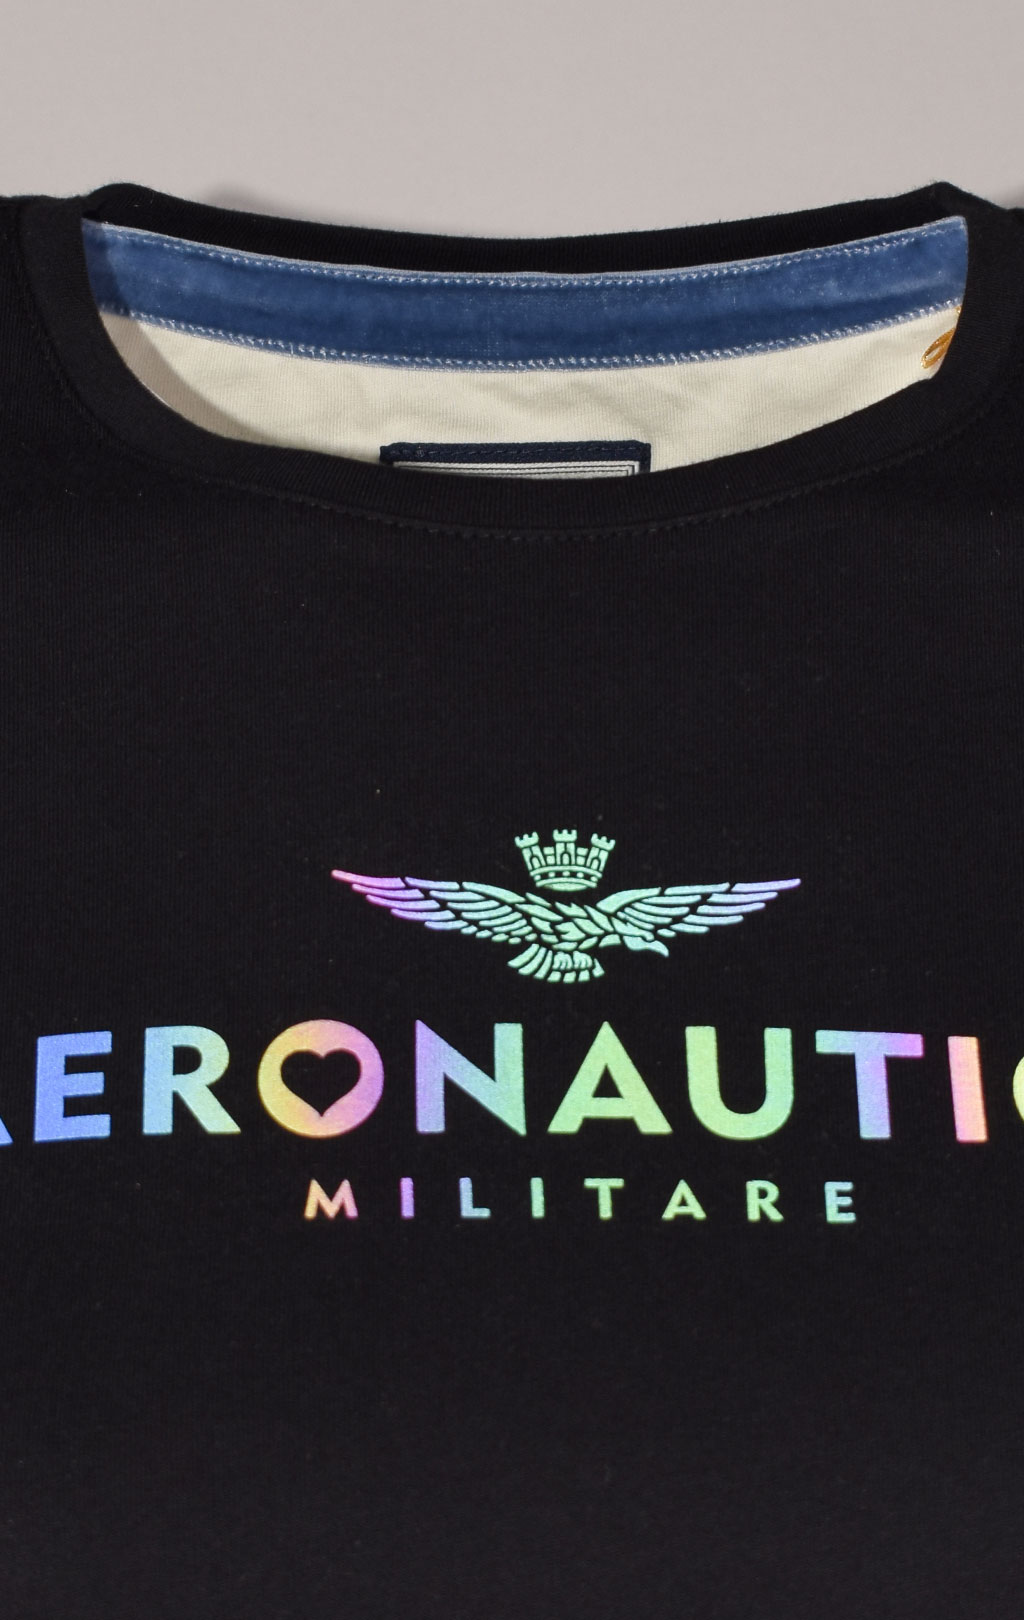 Женская футболка AERONAUTICA MILITARE FW 22/23/TR nero (TS 2031) 